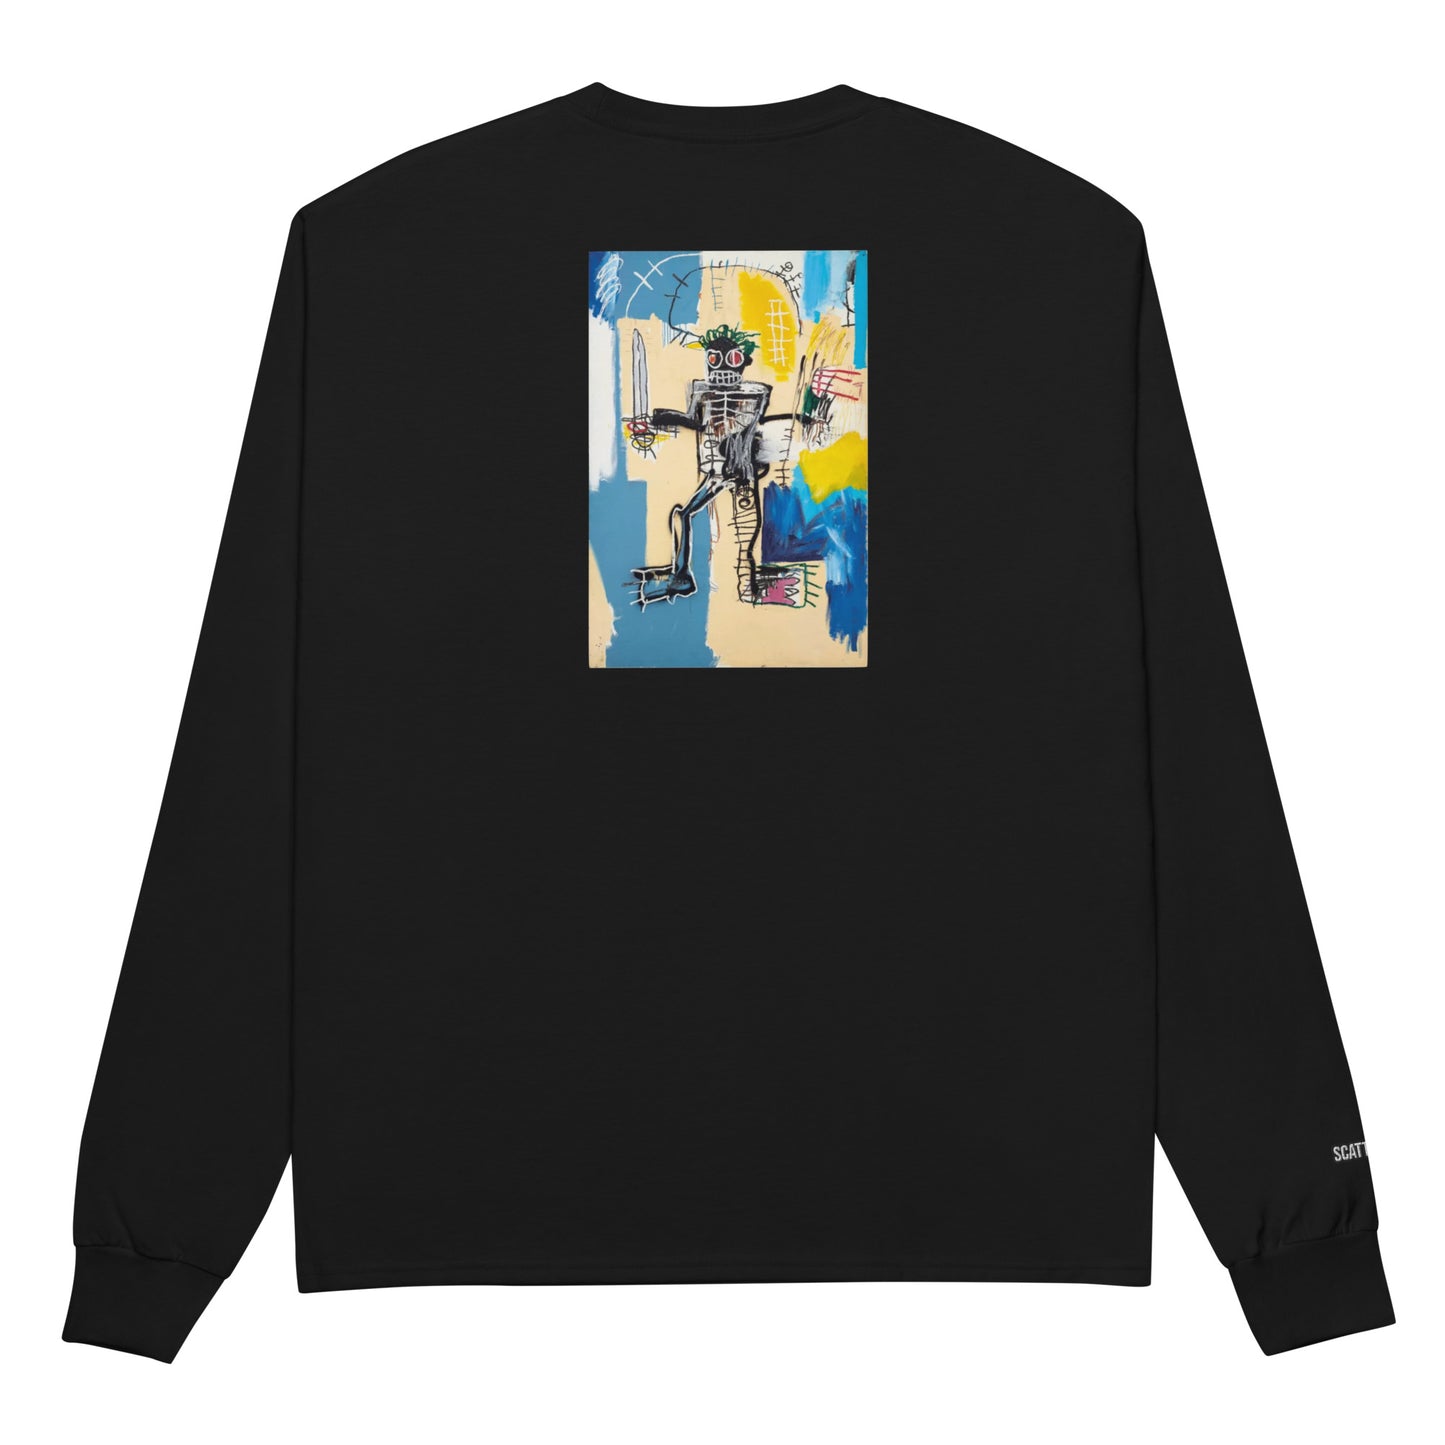 Jean-Michel Basquiat "Warrior" Artwork Printed Premium Black Champion Crewneck Long Sleeve Shirt Scattered Streetwear